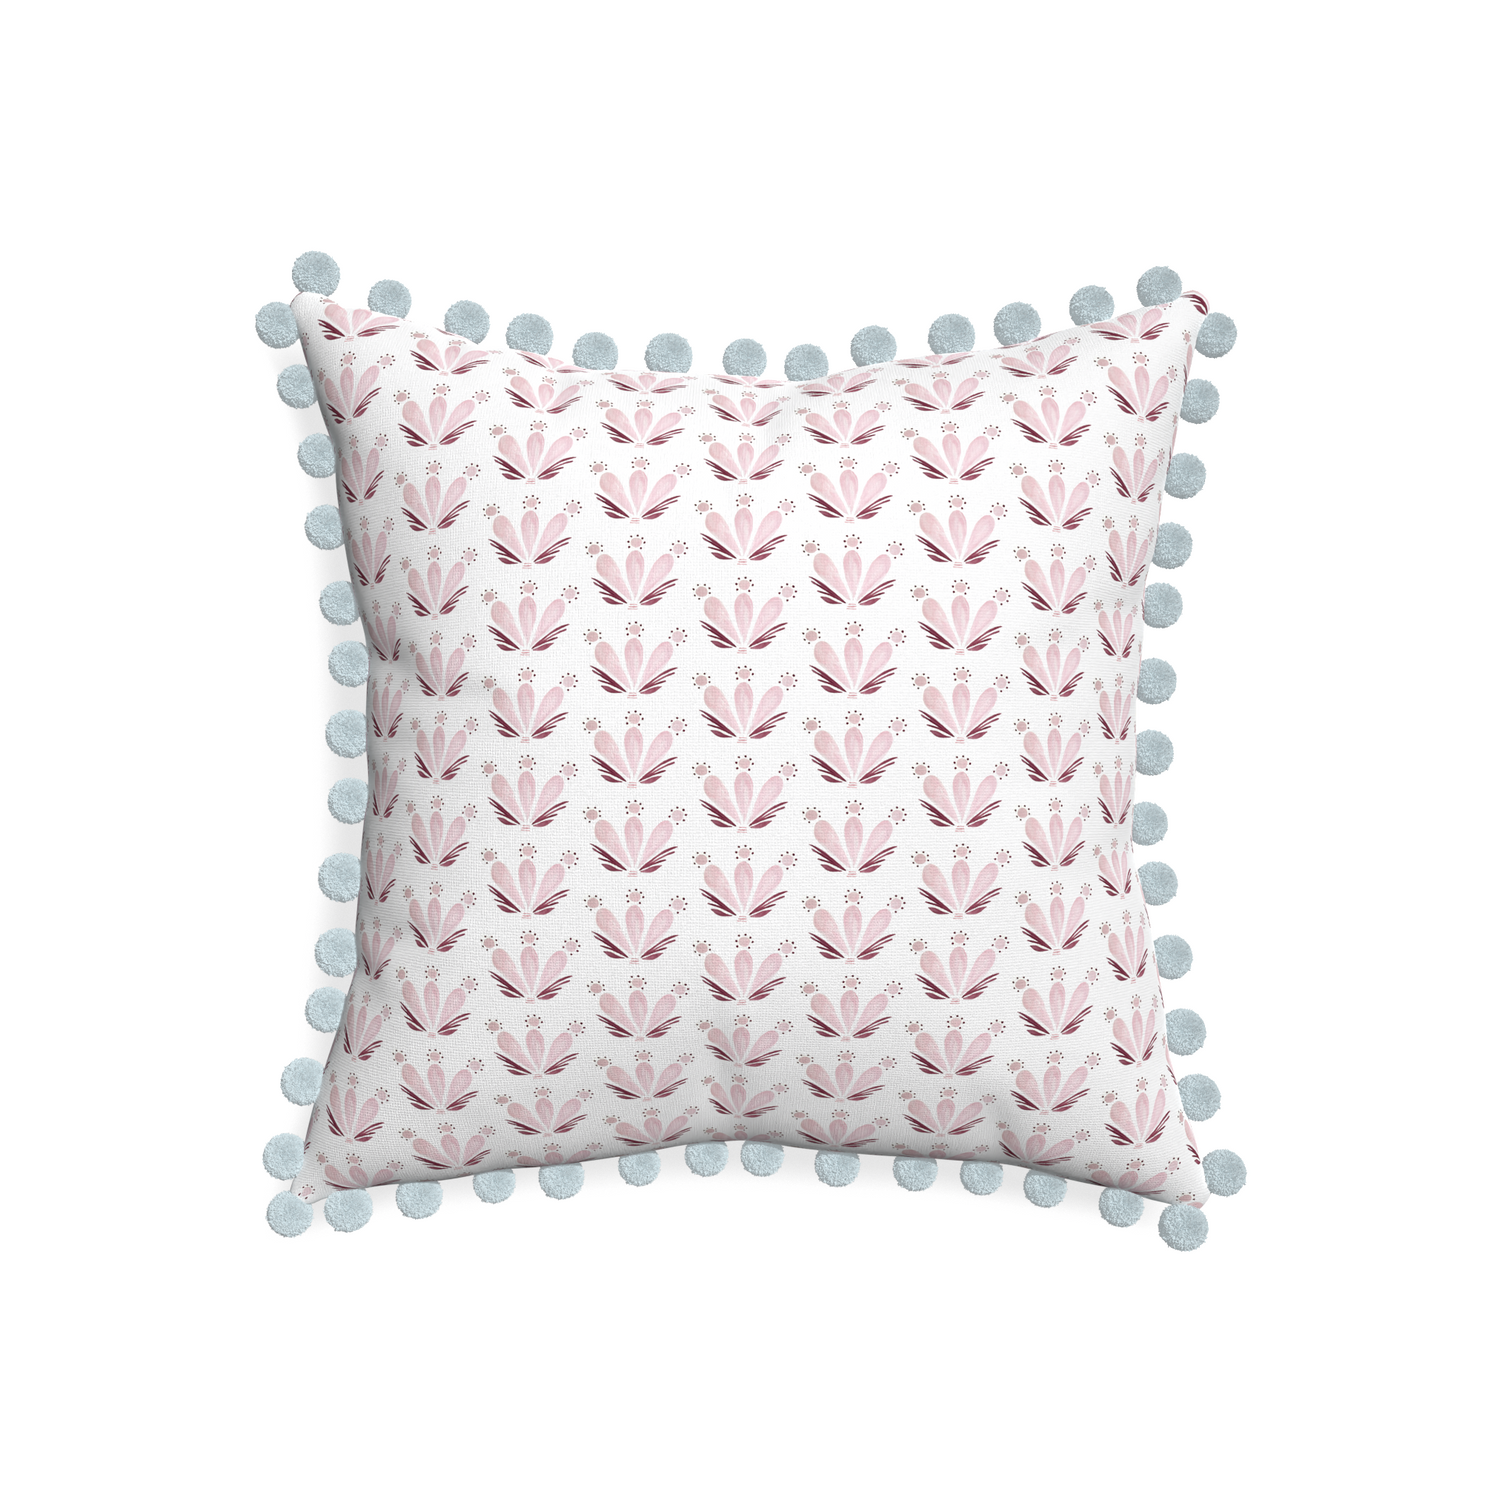 20-square serena pink custom pillow with powder pom pom on white background